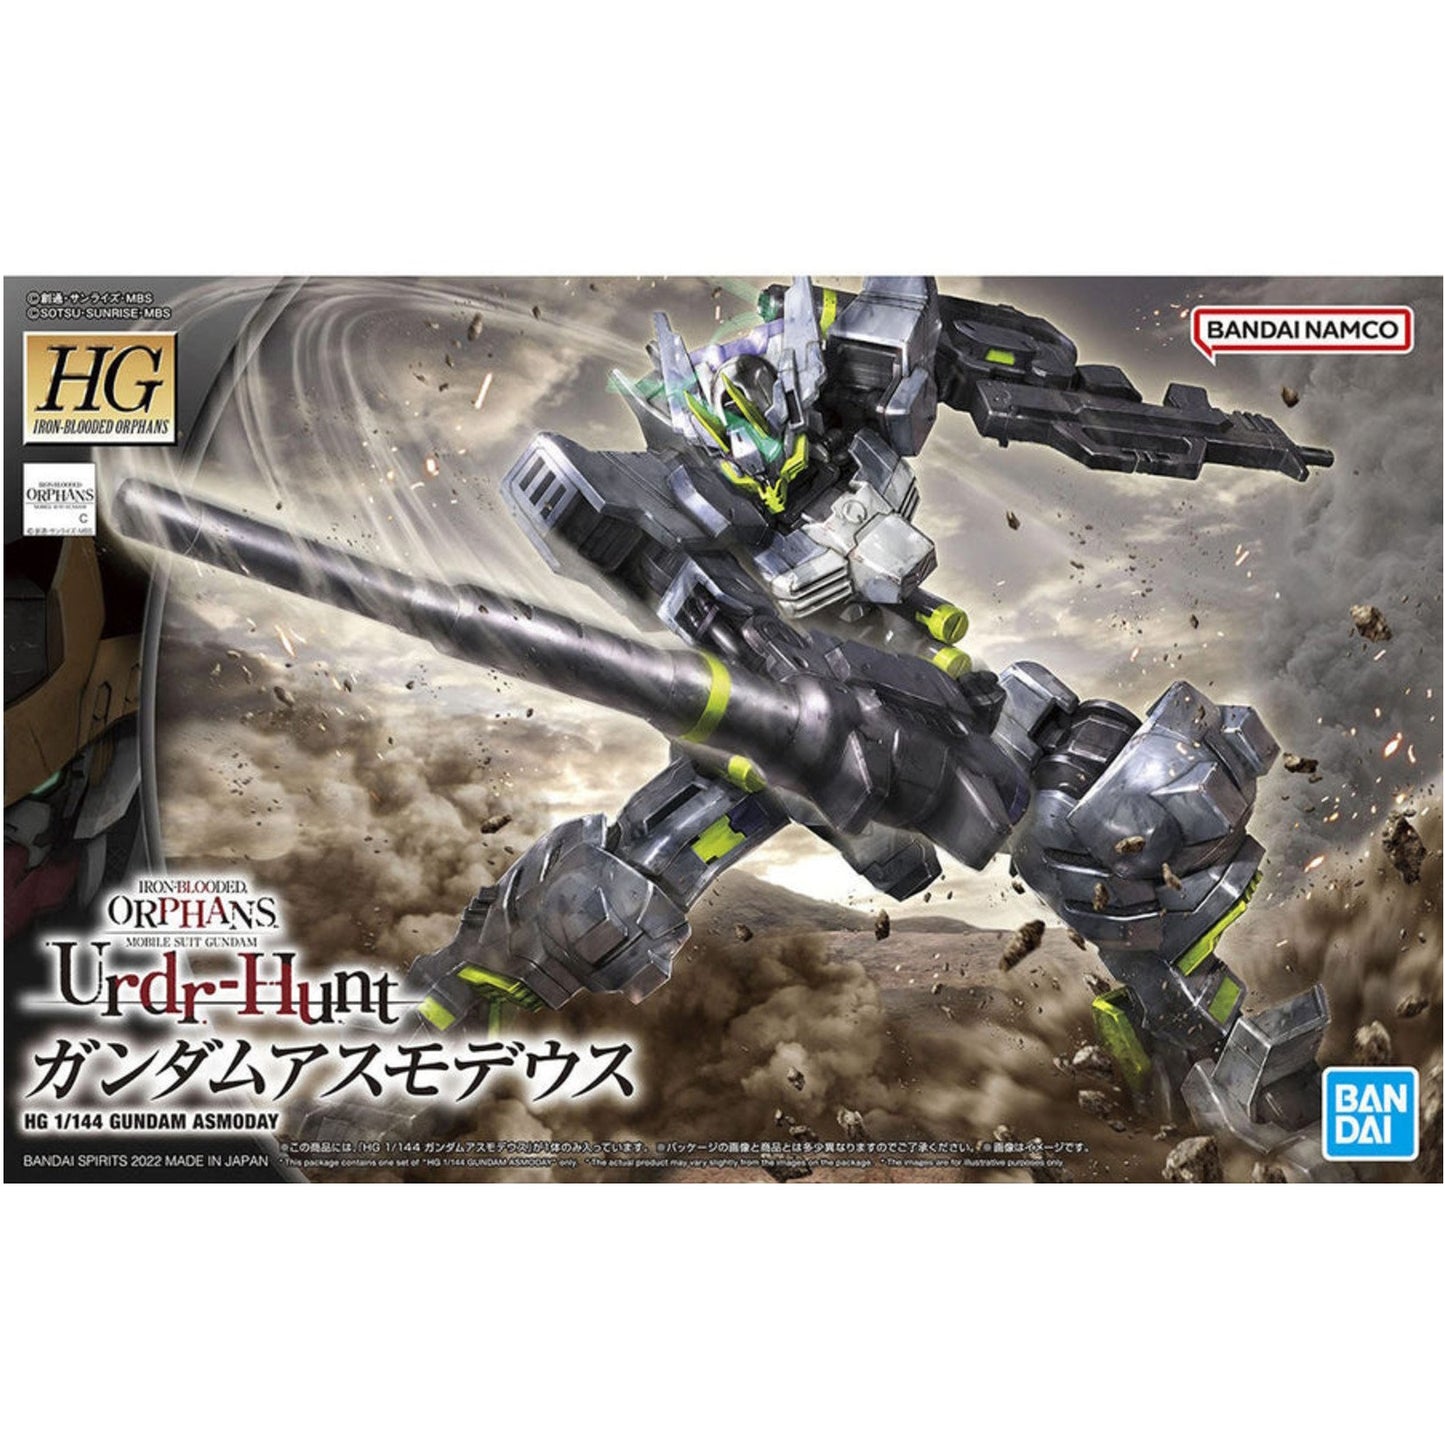 Bandai 2553795 HG IBO #043 Gundam Asmoday Urdr-Hunt